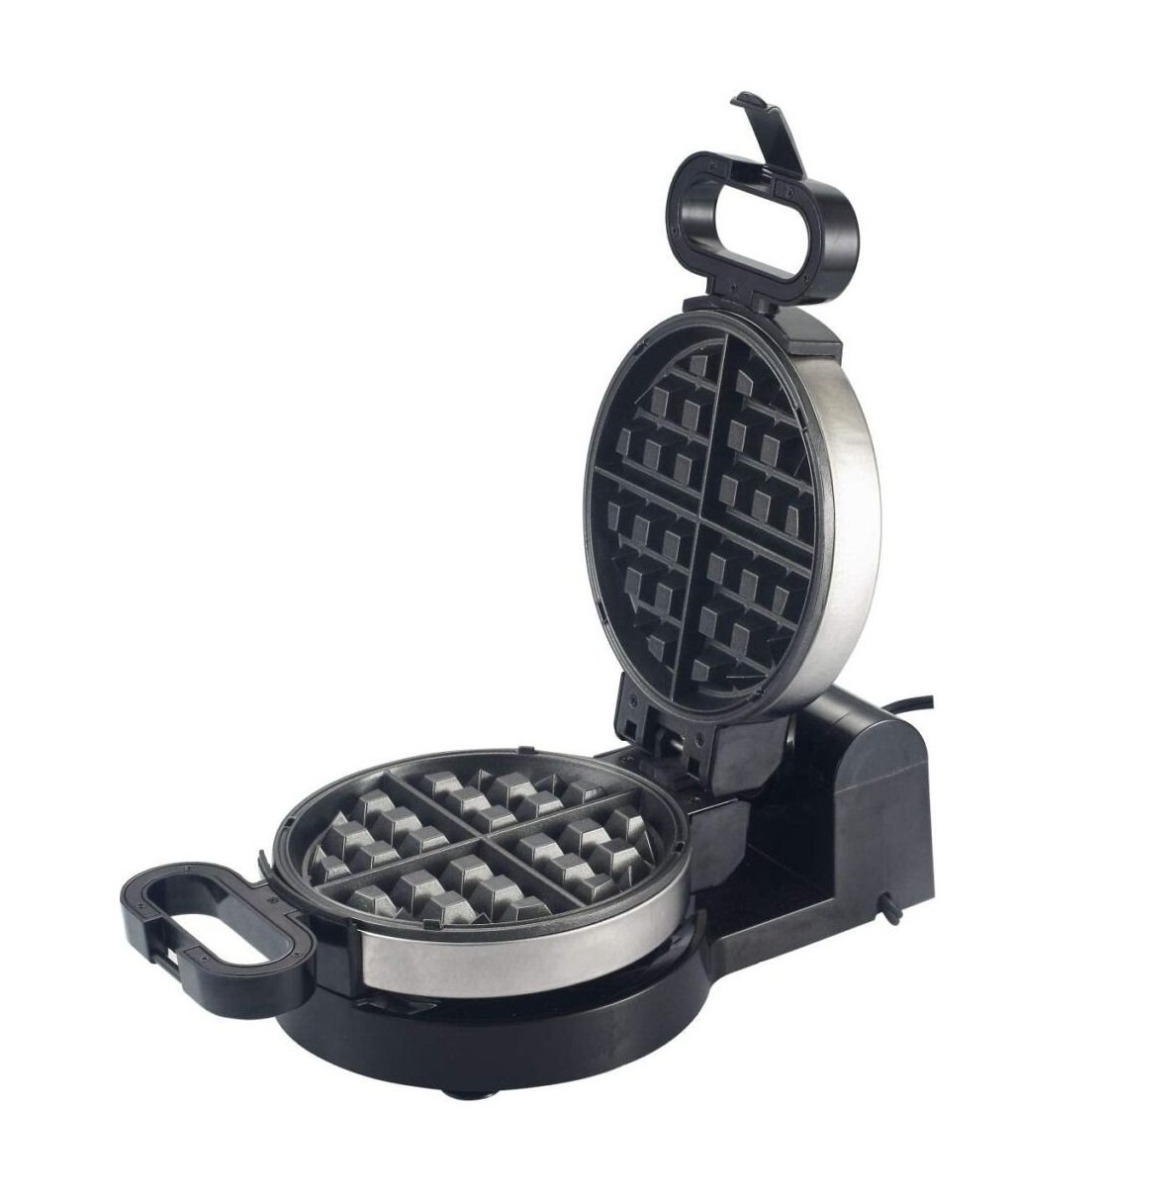 Home Waffle Maker, 1000 Watt, Black and Silver - WK3007